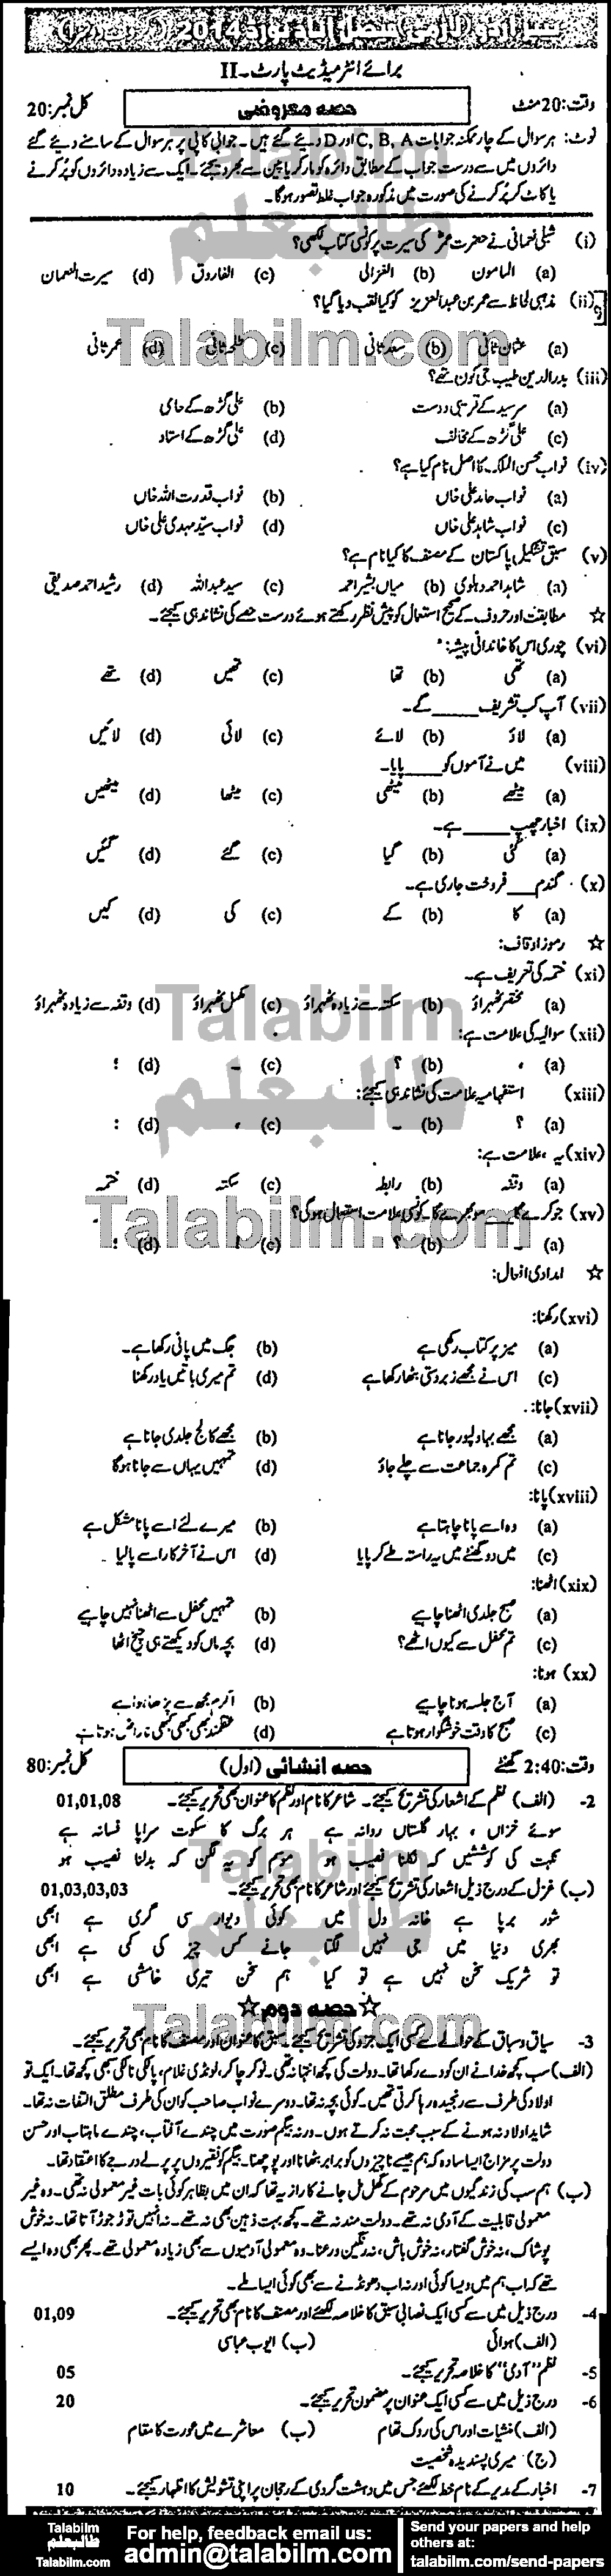 Urdu 0 past paper for Group-II 2014